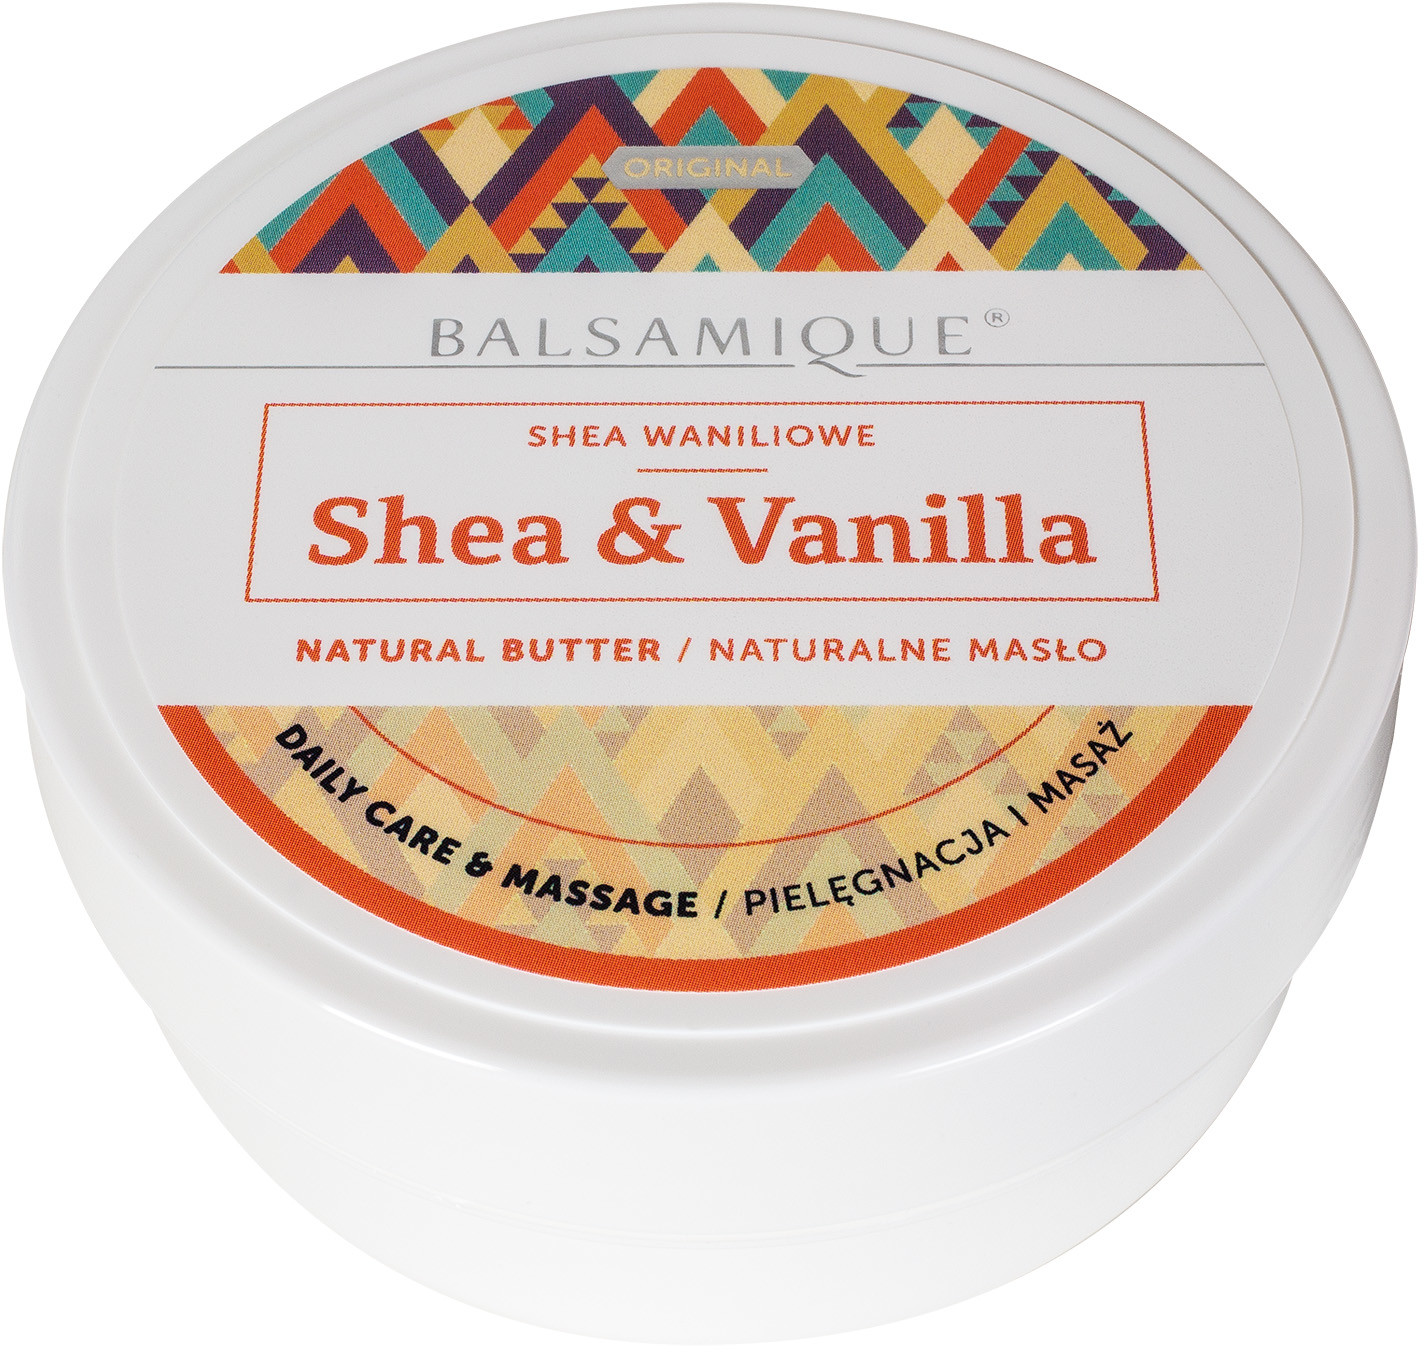 Balsamique Naturalne masło waniliowe - Shea & Vanilla -